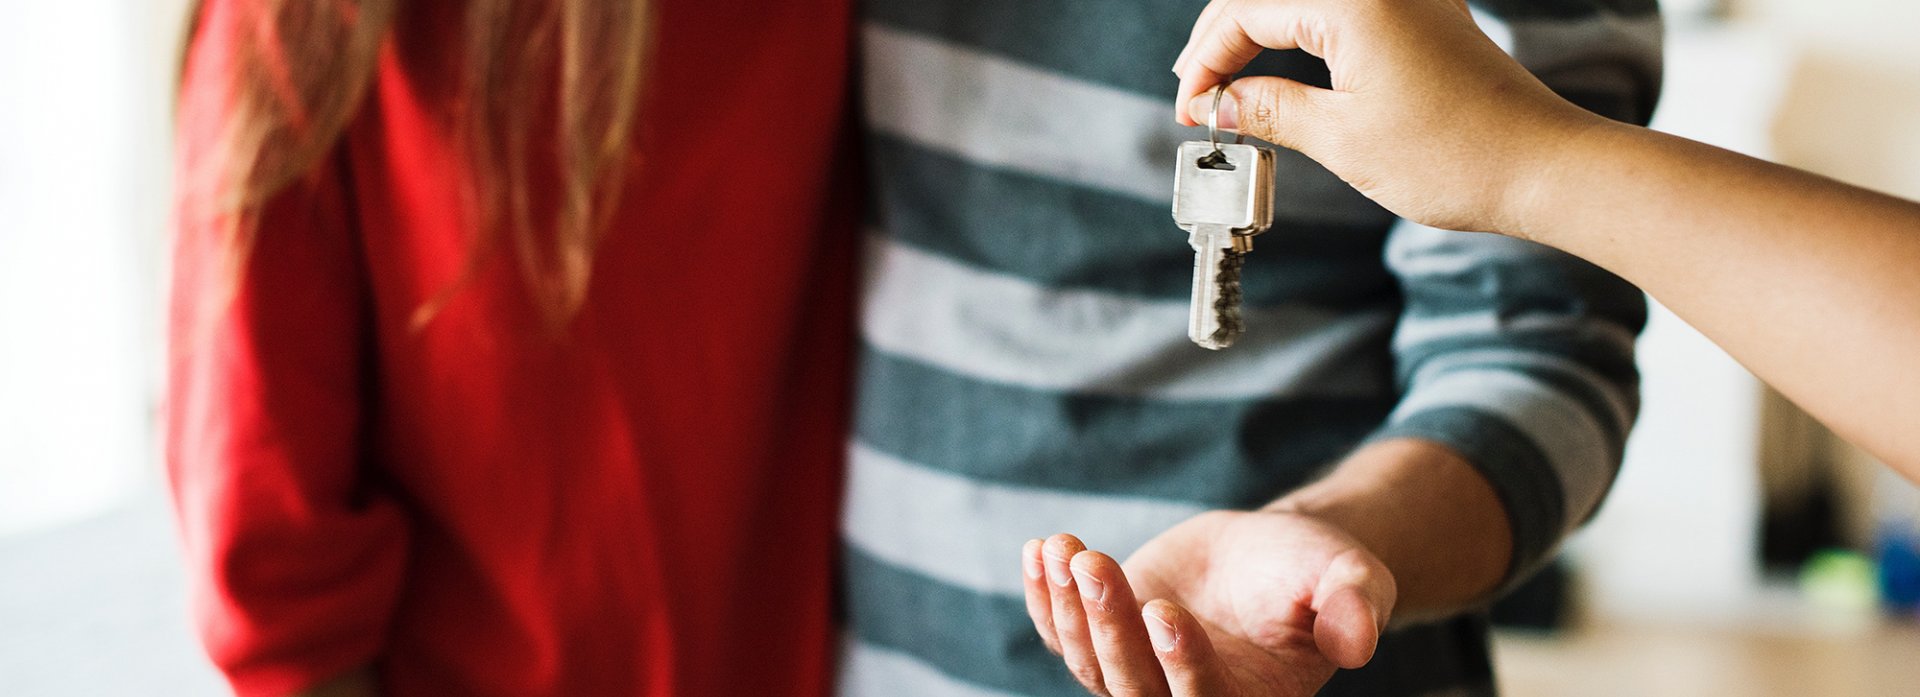 Handing home keys to new buyers